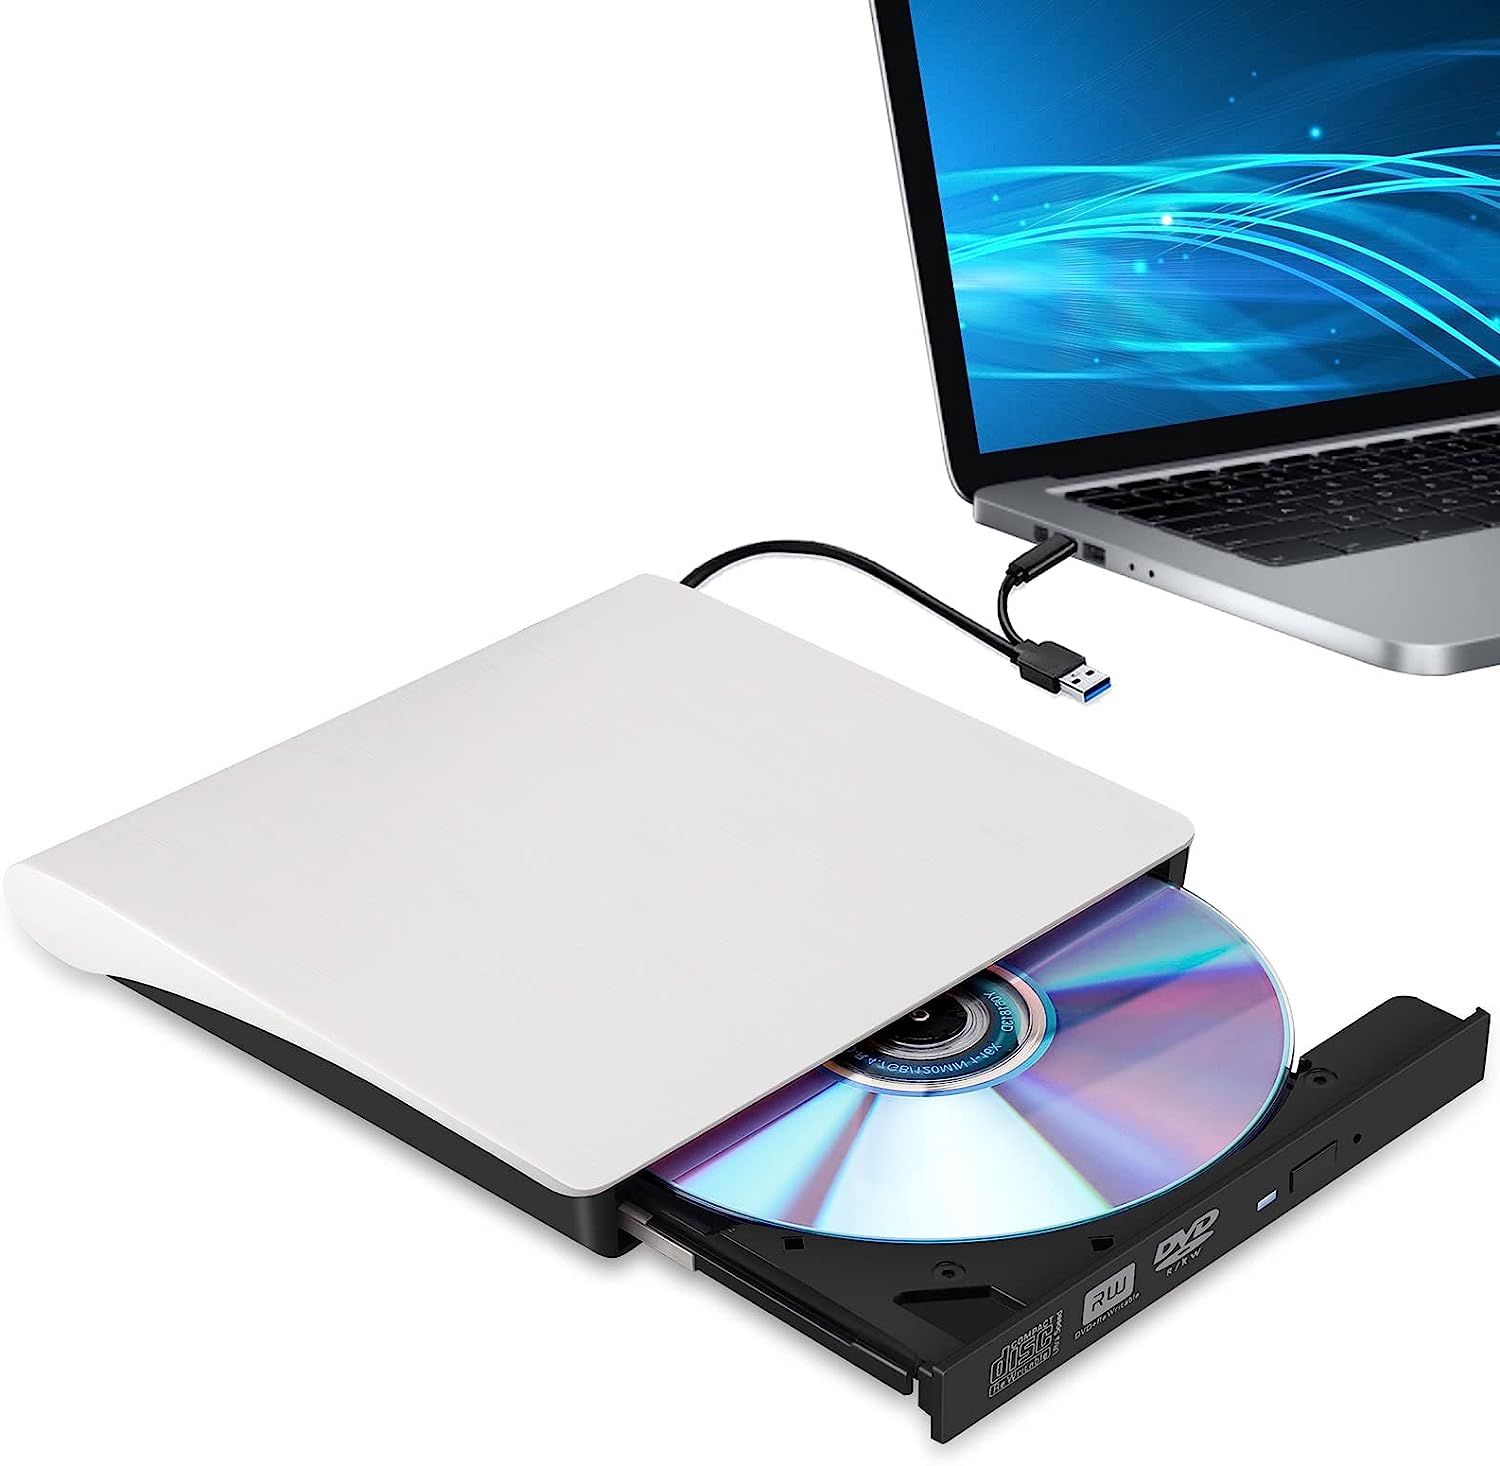 Hcsunfly External CD/DVD Drive for Laptop, Type-C [...]